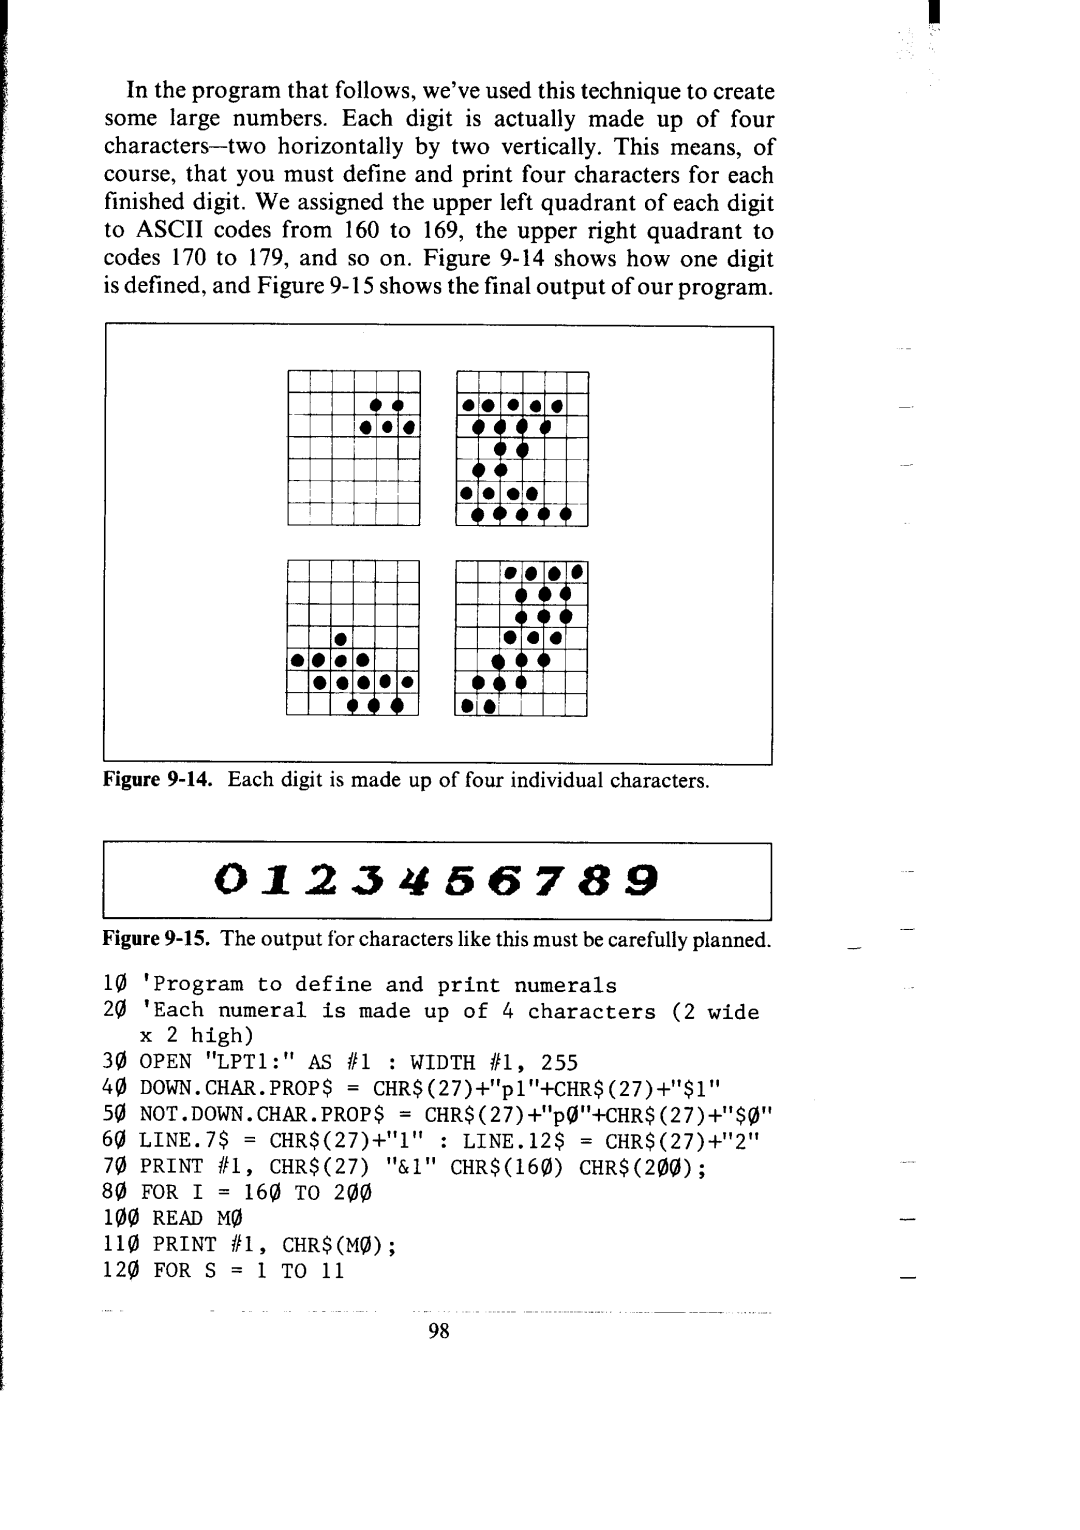 Star Micronics SR-10/I5 user manual Program to define and print numerals 